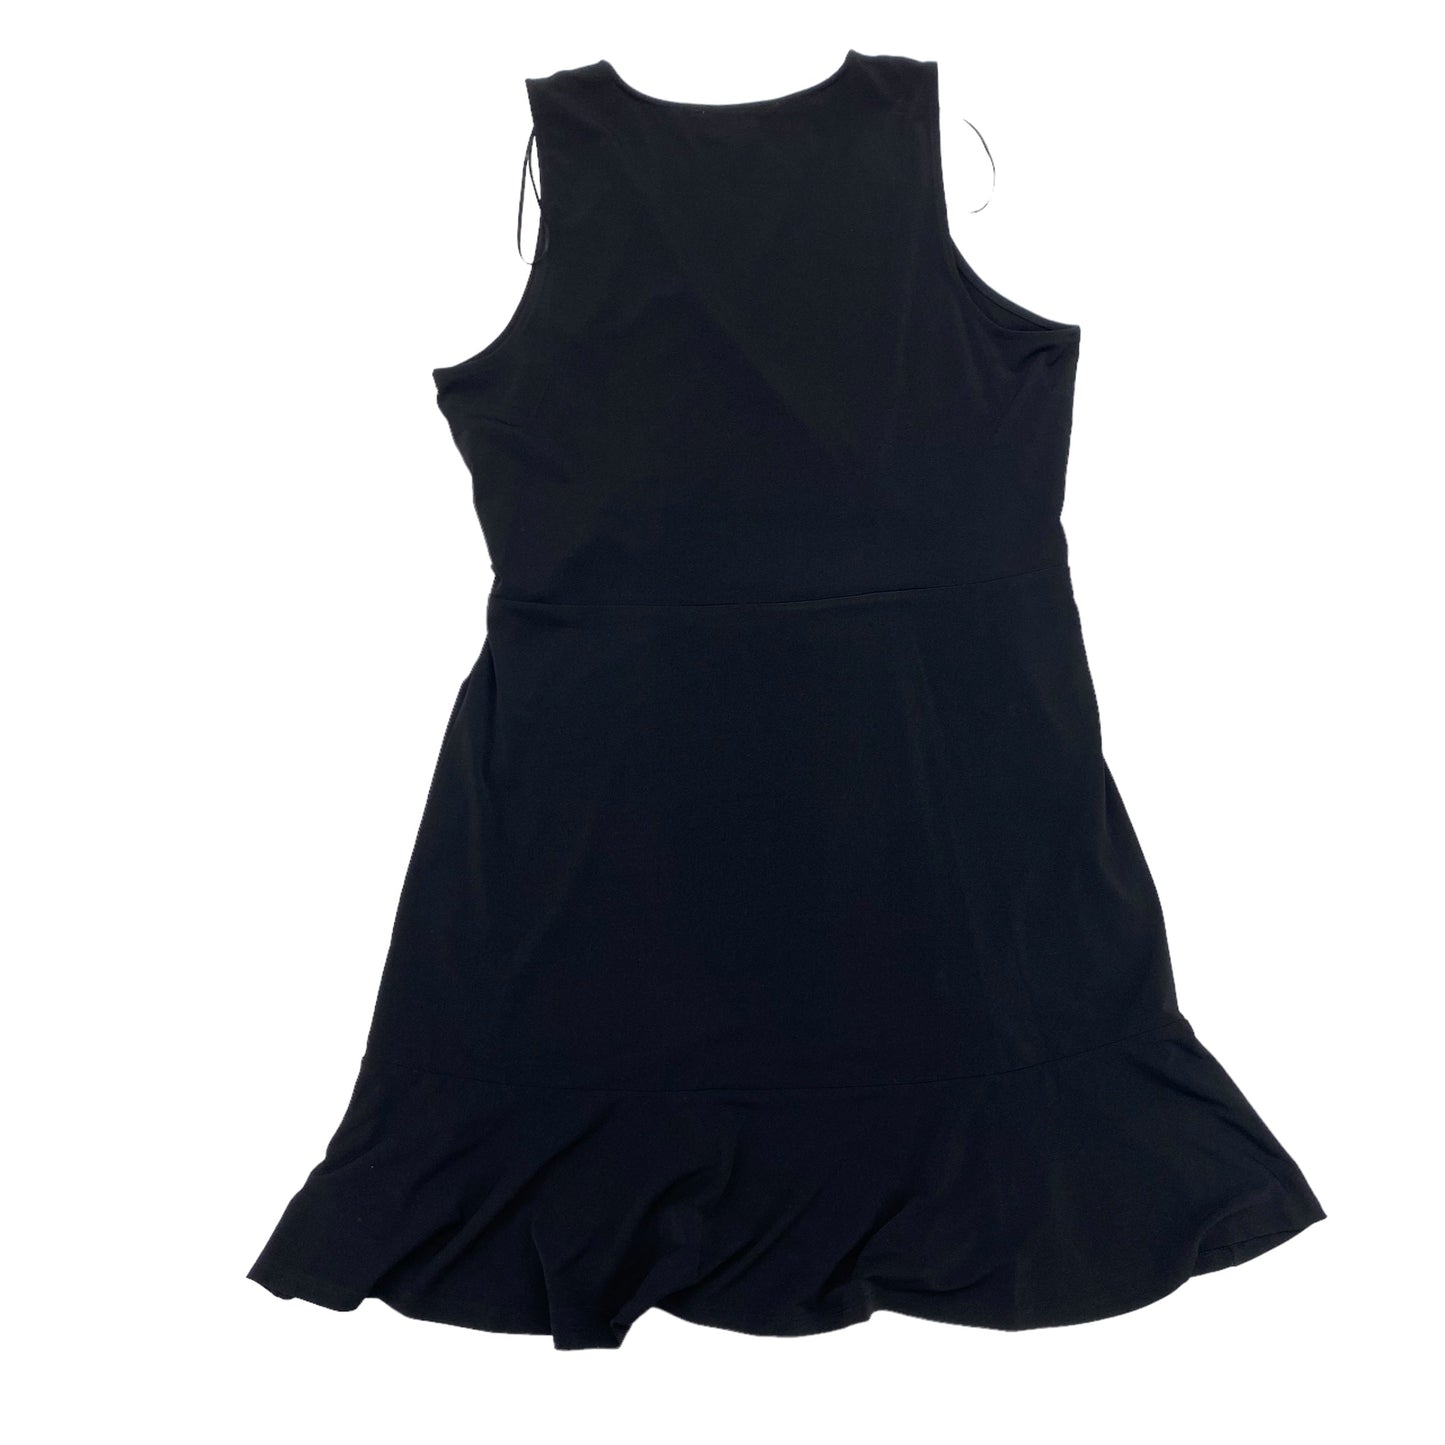 Dress Designer By Michael Kors  Size: L